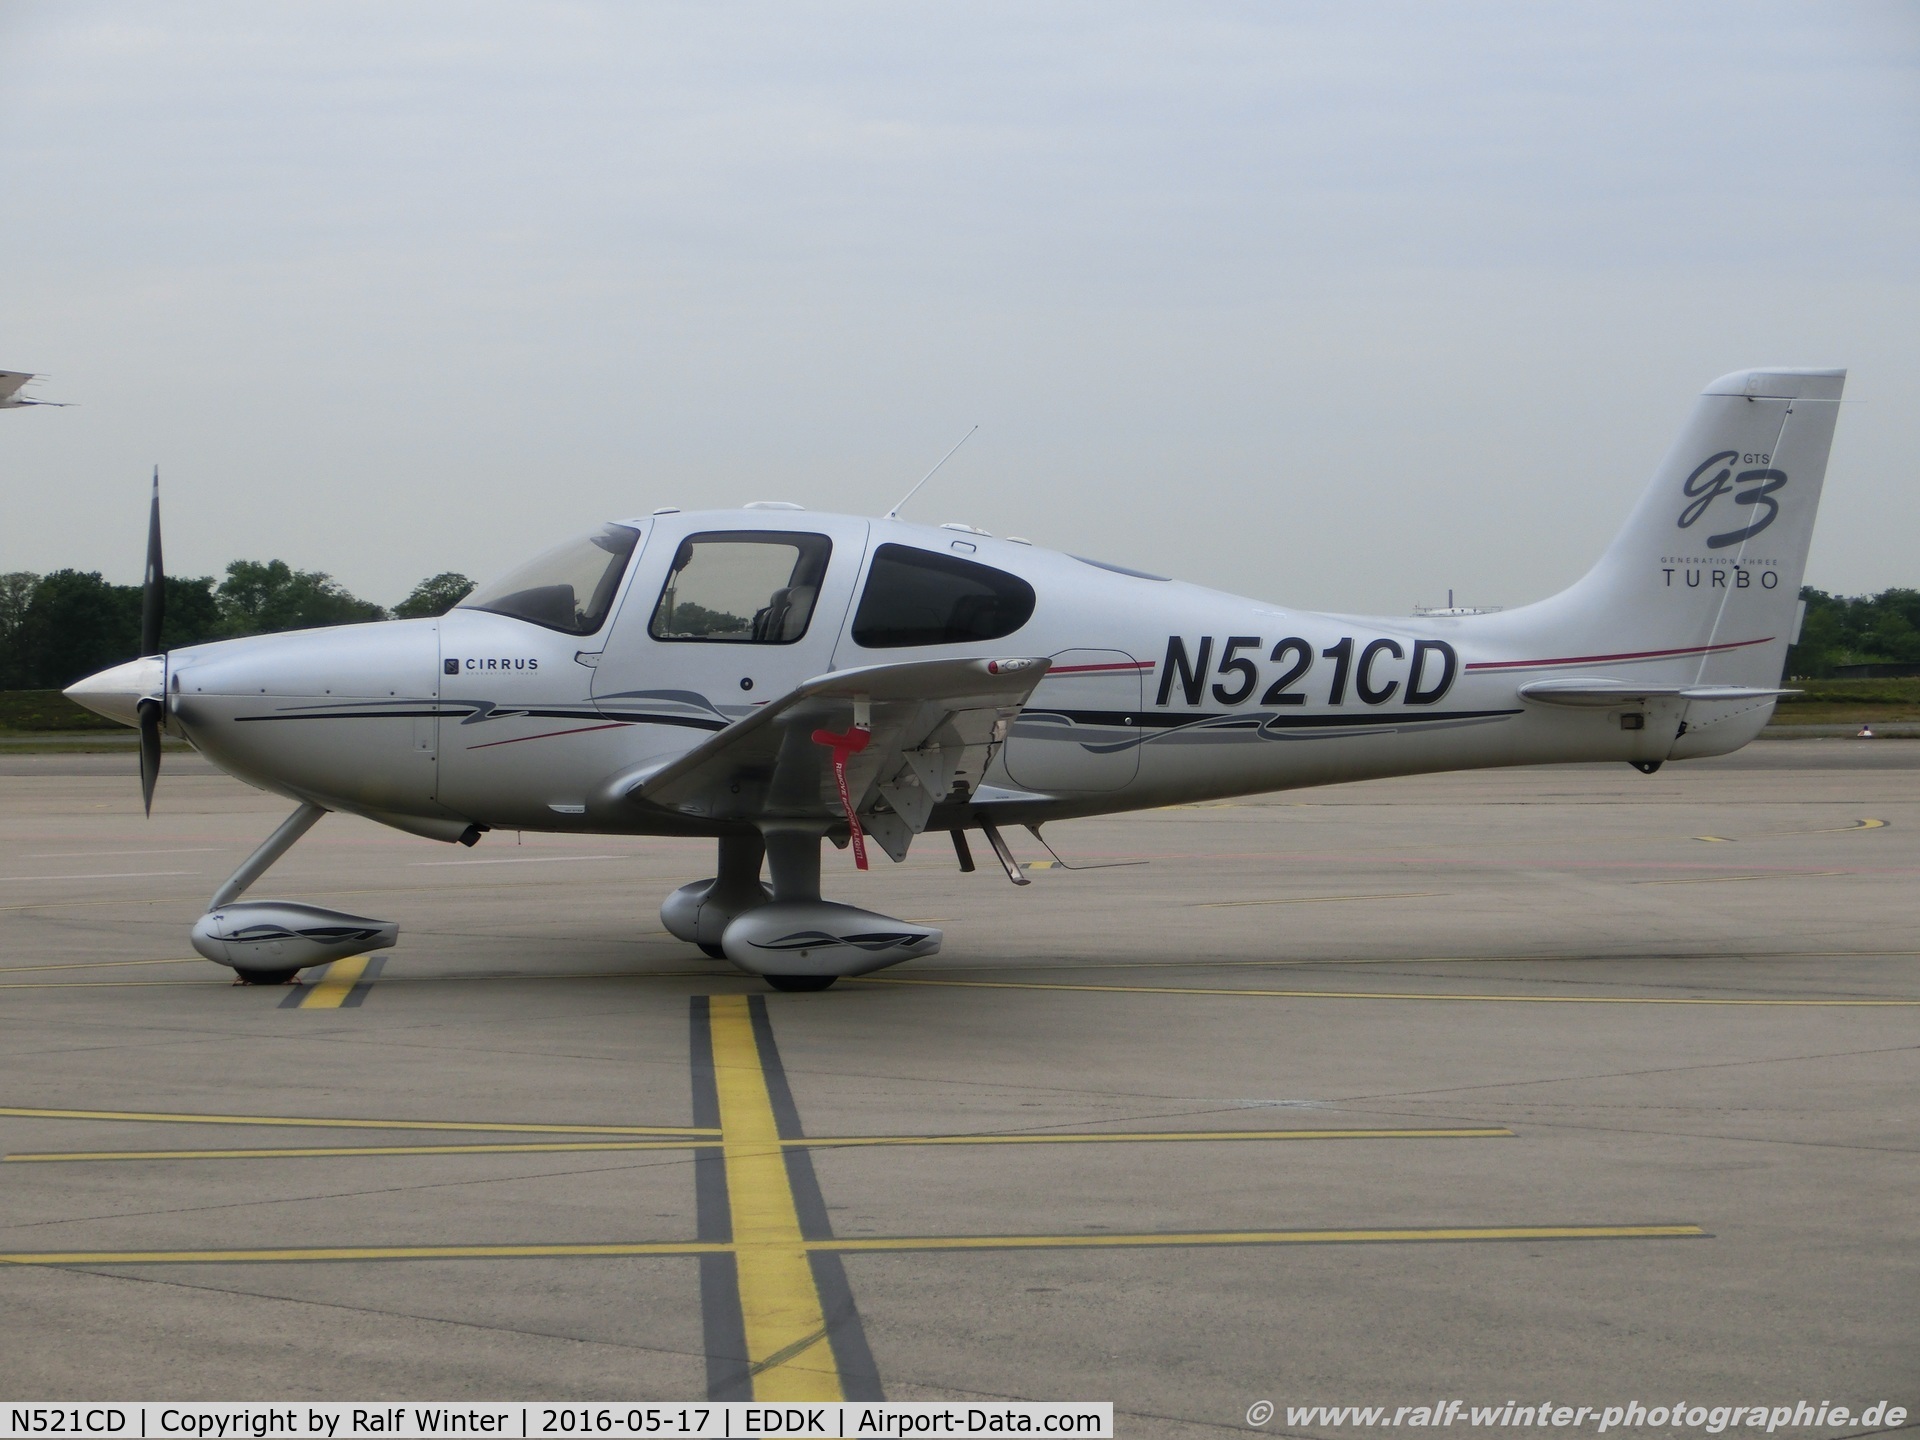 N521CD, 2007 Cirrus SR22 G3 GTS Turbo C/N 2441, Cirrus Design SR-22 - Assegai Aviation Inc - 2441 - N521CD - 17.05.2016 - CGN